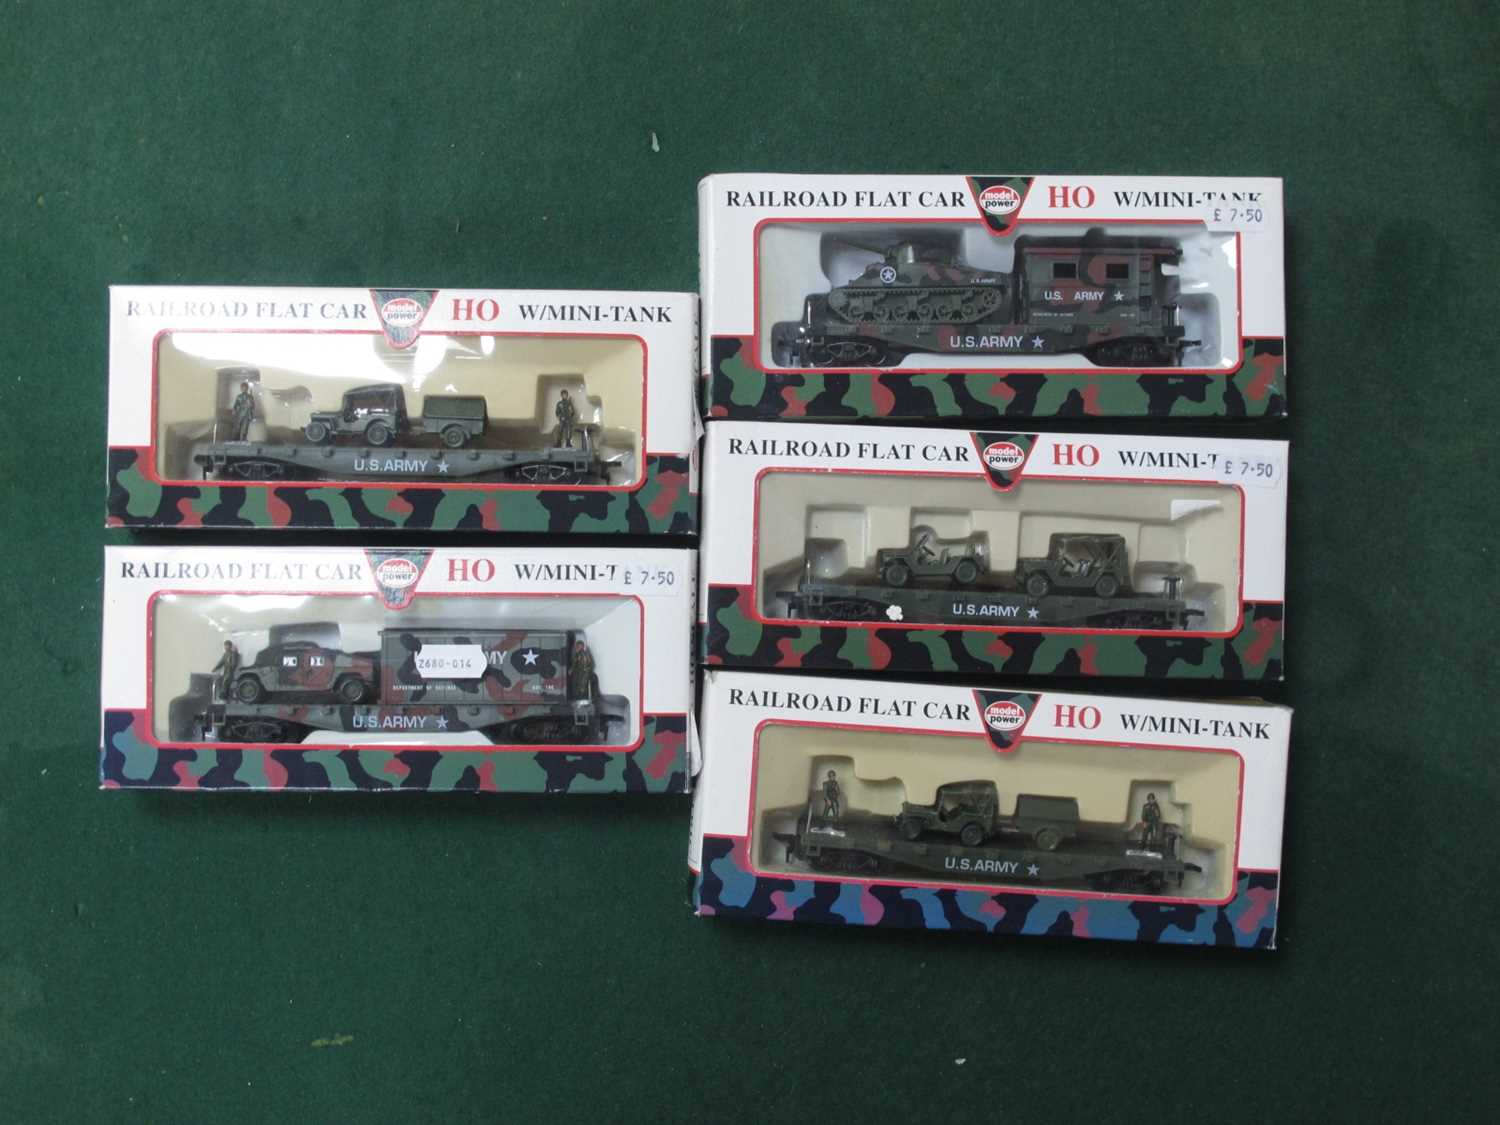 Five Model Power (Roco for U.S.A Market) "HO" Gauge US Army Railroad Flat Cars, with "Mini-Trix